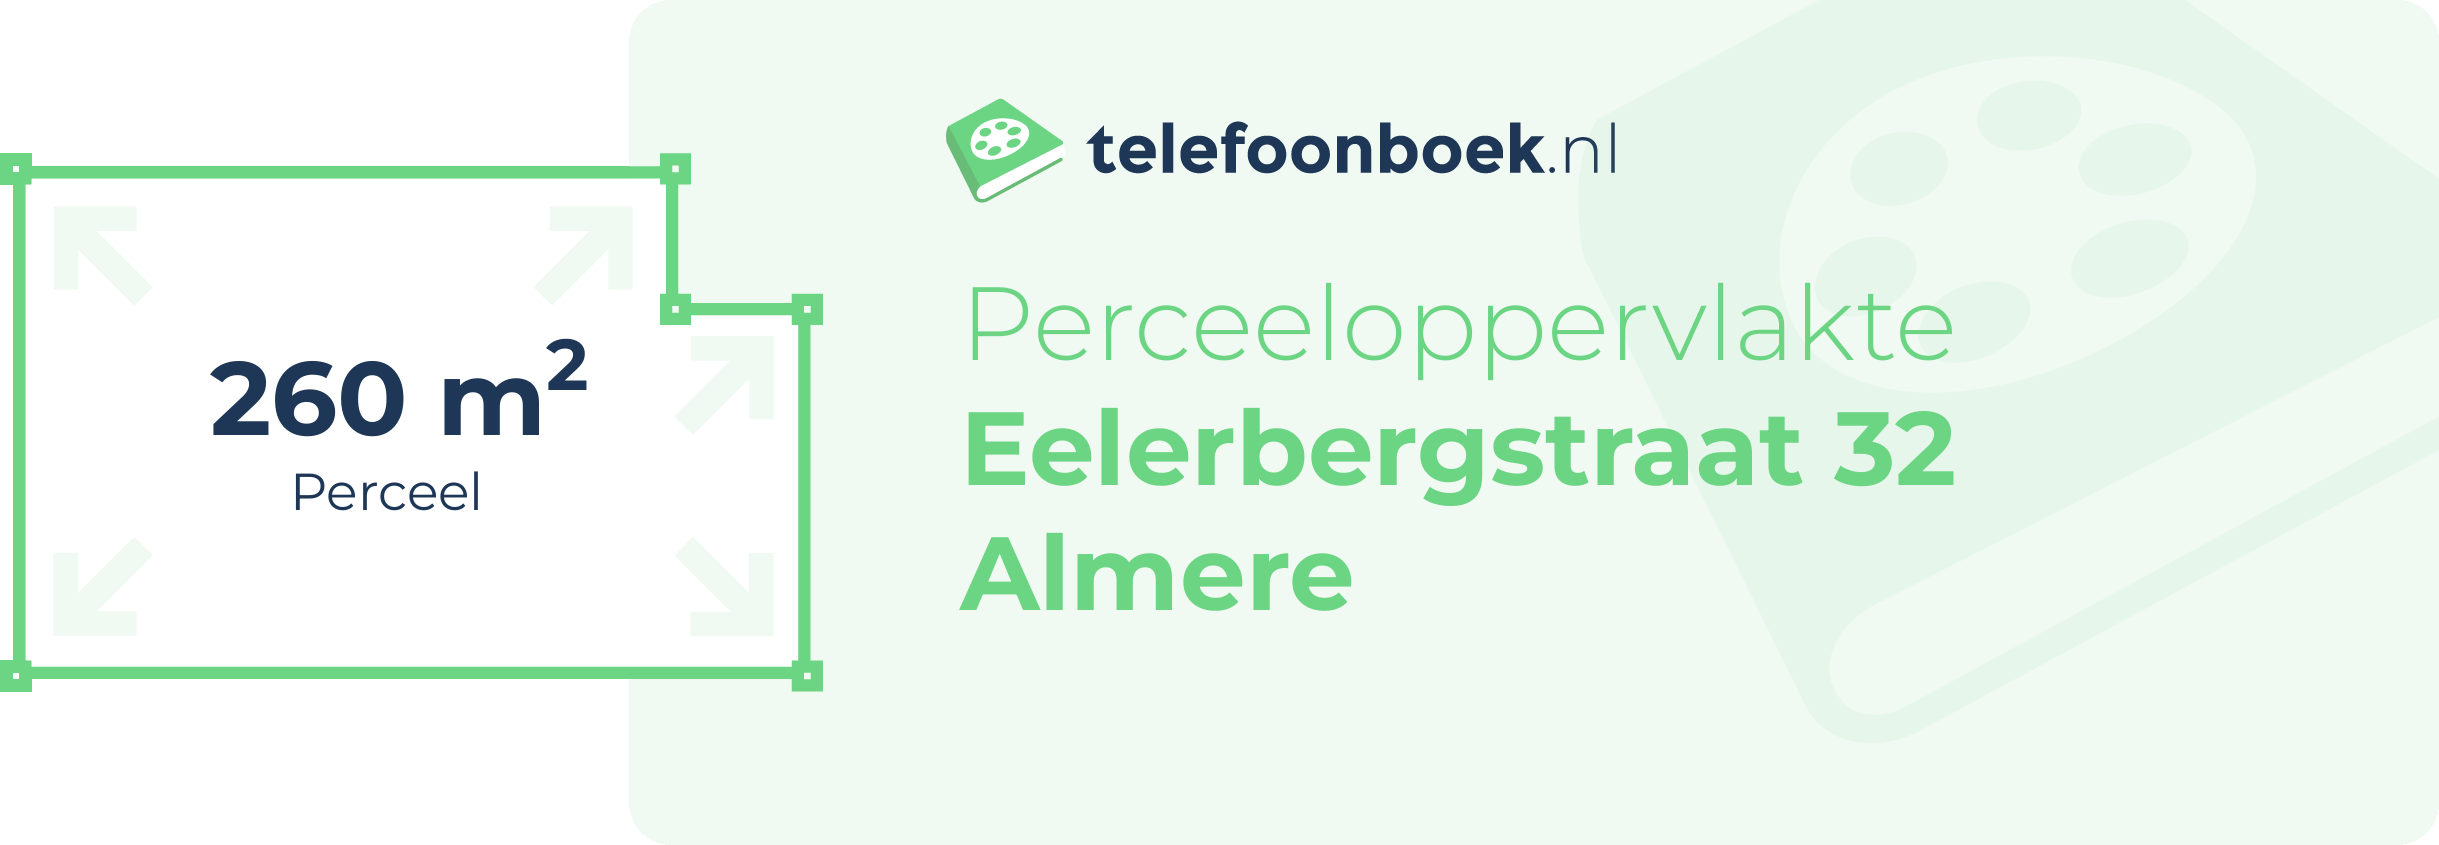 Perceeloppervlakte Eelerbergstraat 32 Almere